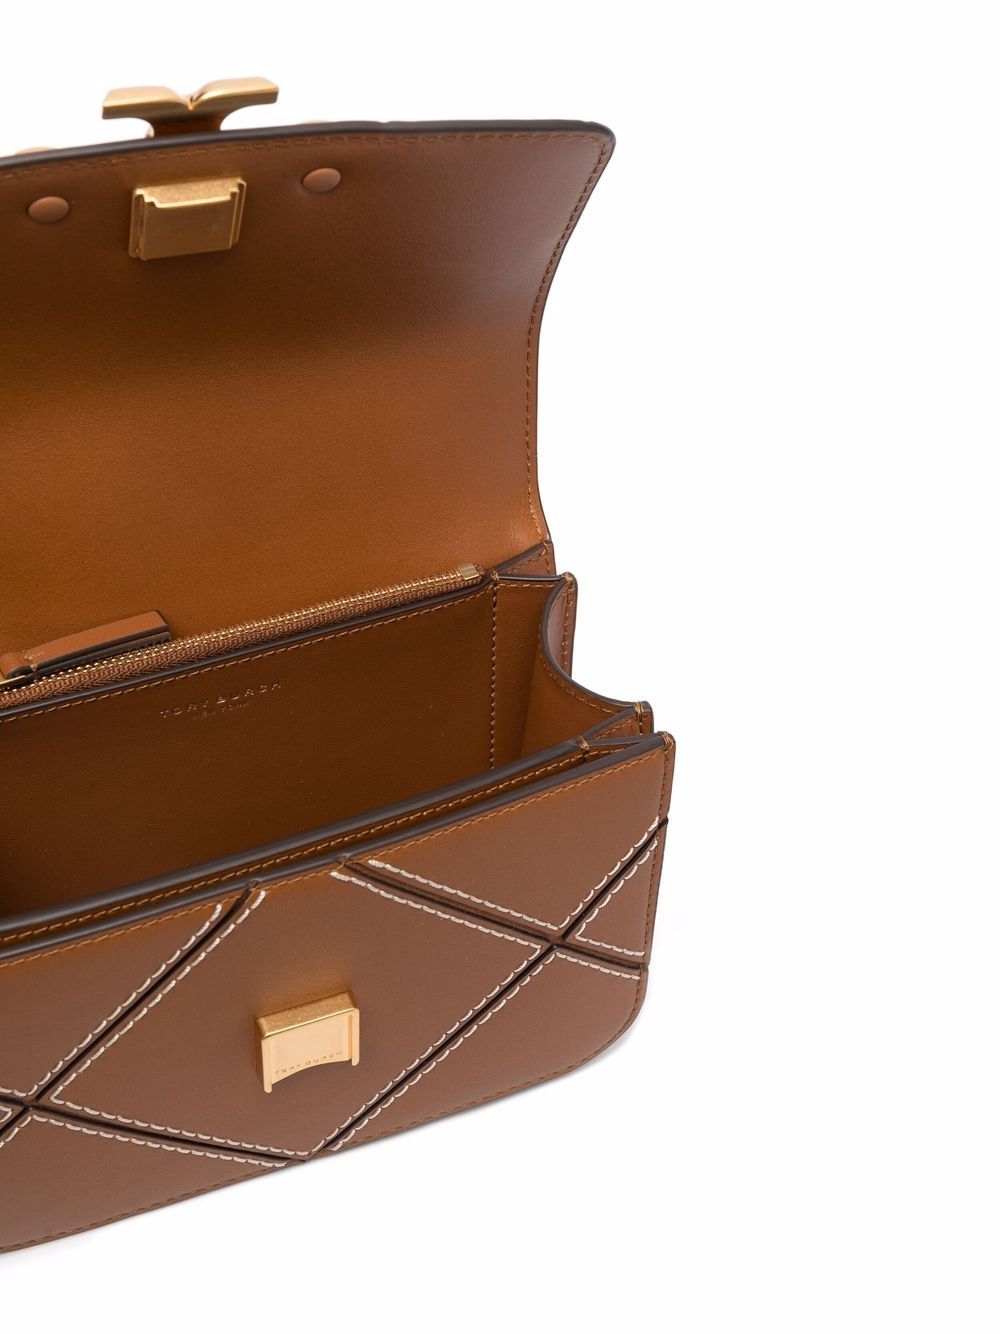 Tory Burch Brown - Leather - Shoulder Crossbody Bag